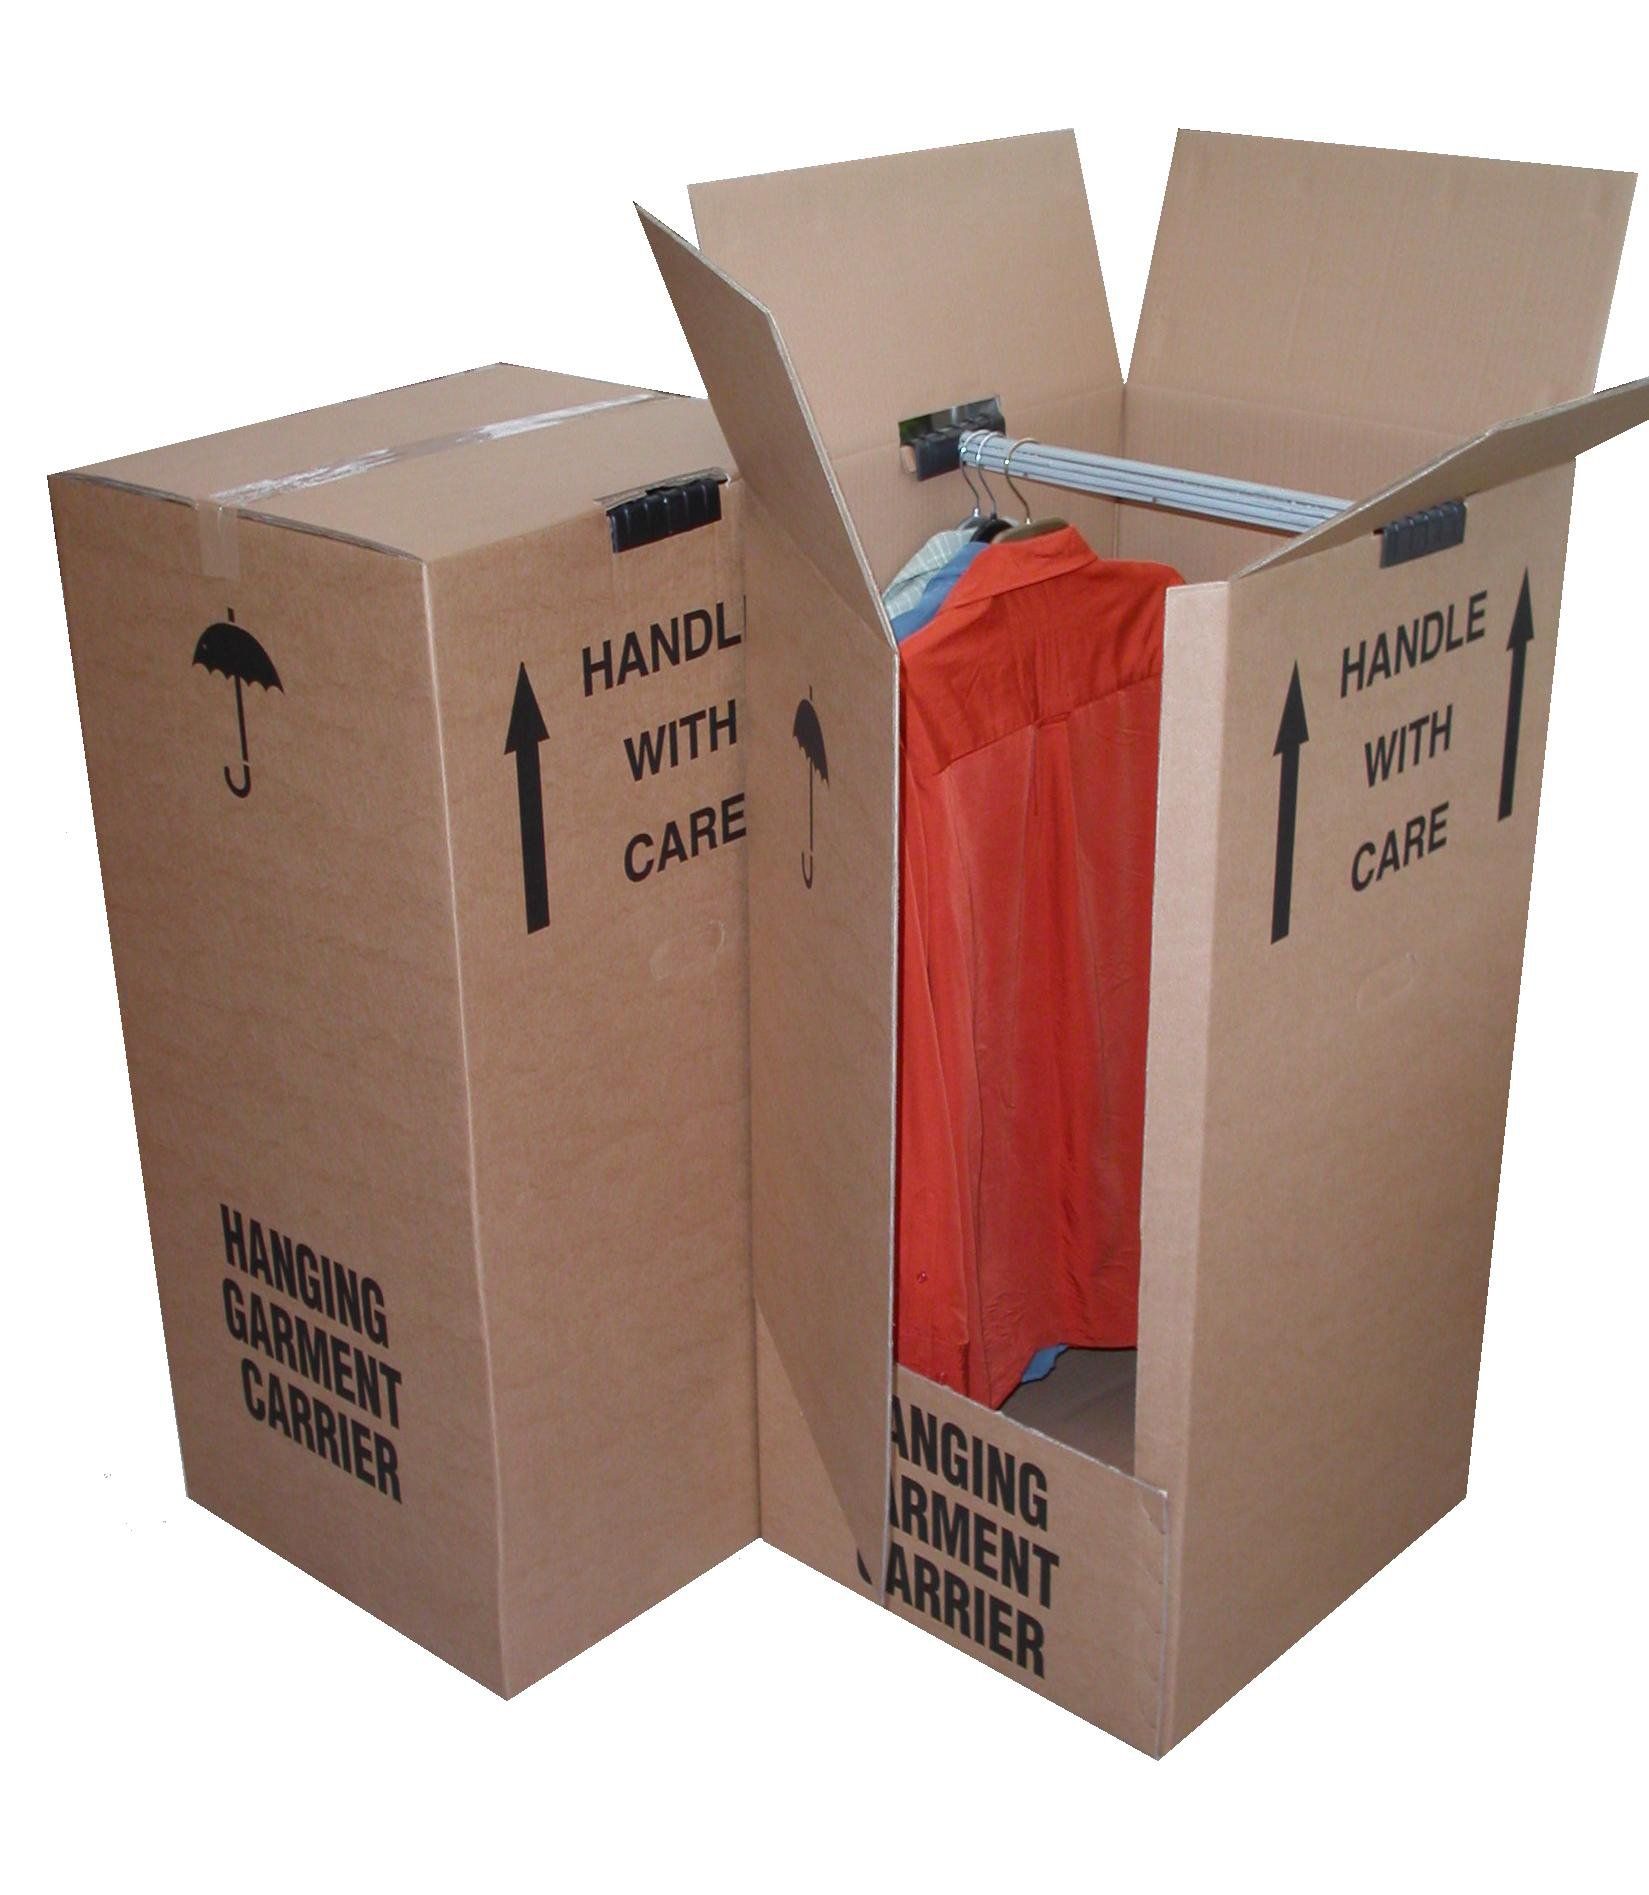 Hanging-garment carrier